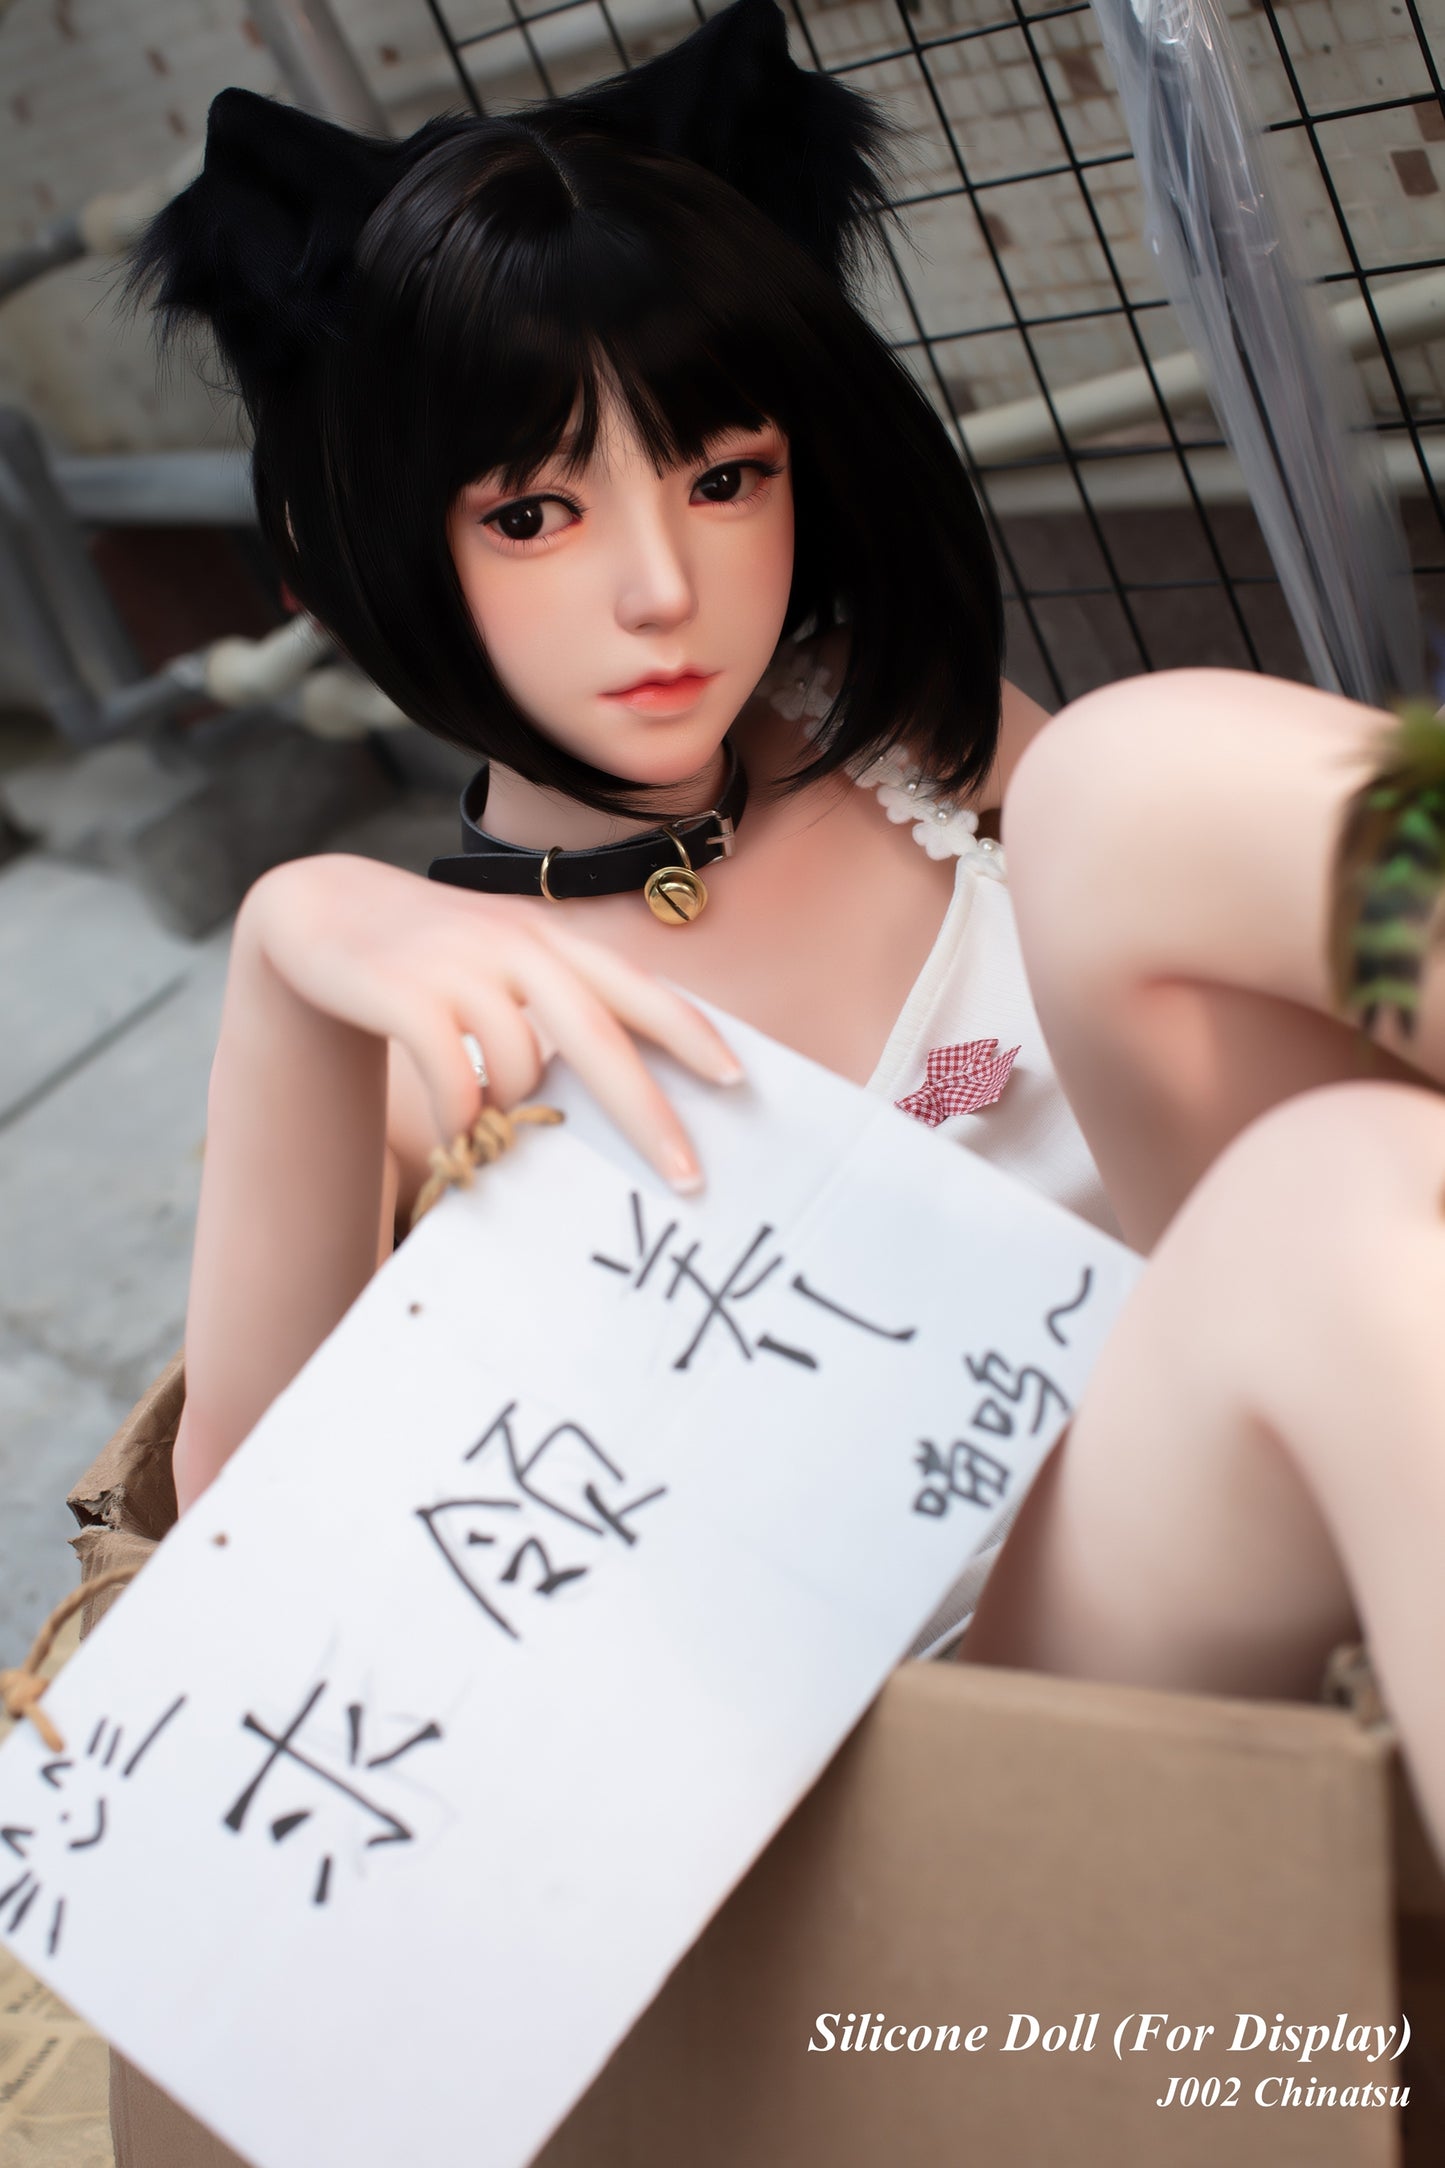 FU DOLL Full Silicone Doll Life-like Fashion Display Mannequins For Display [ J002 Chinatsu ]